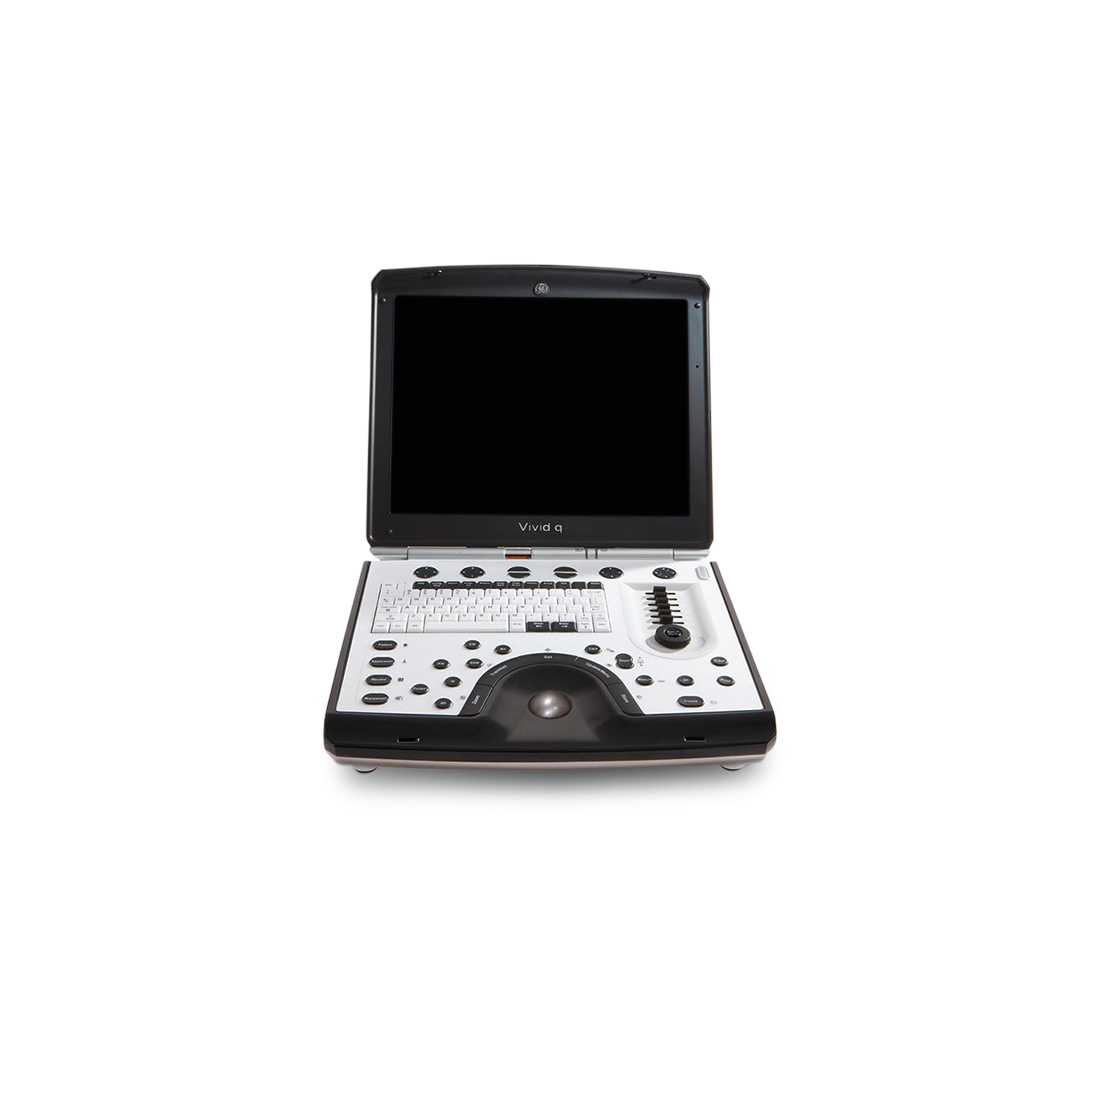 GE Vivid q Portable Ultrasound